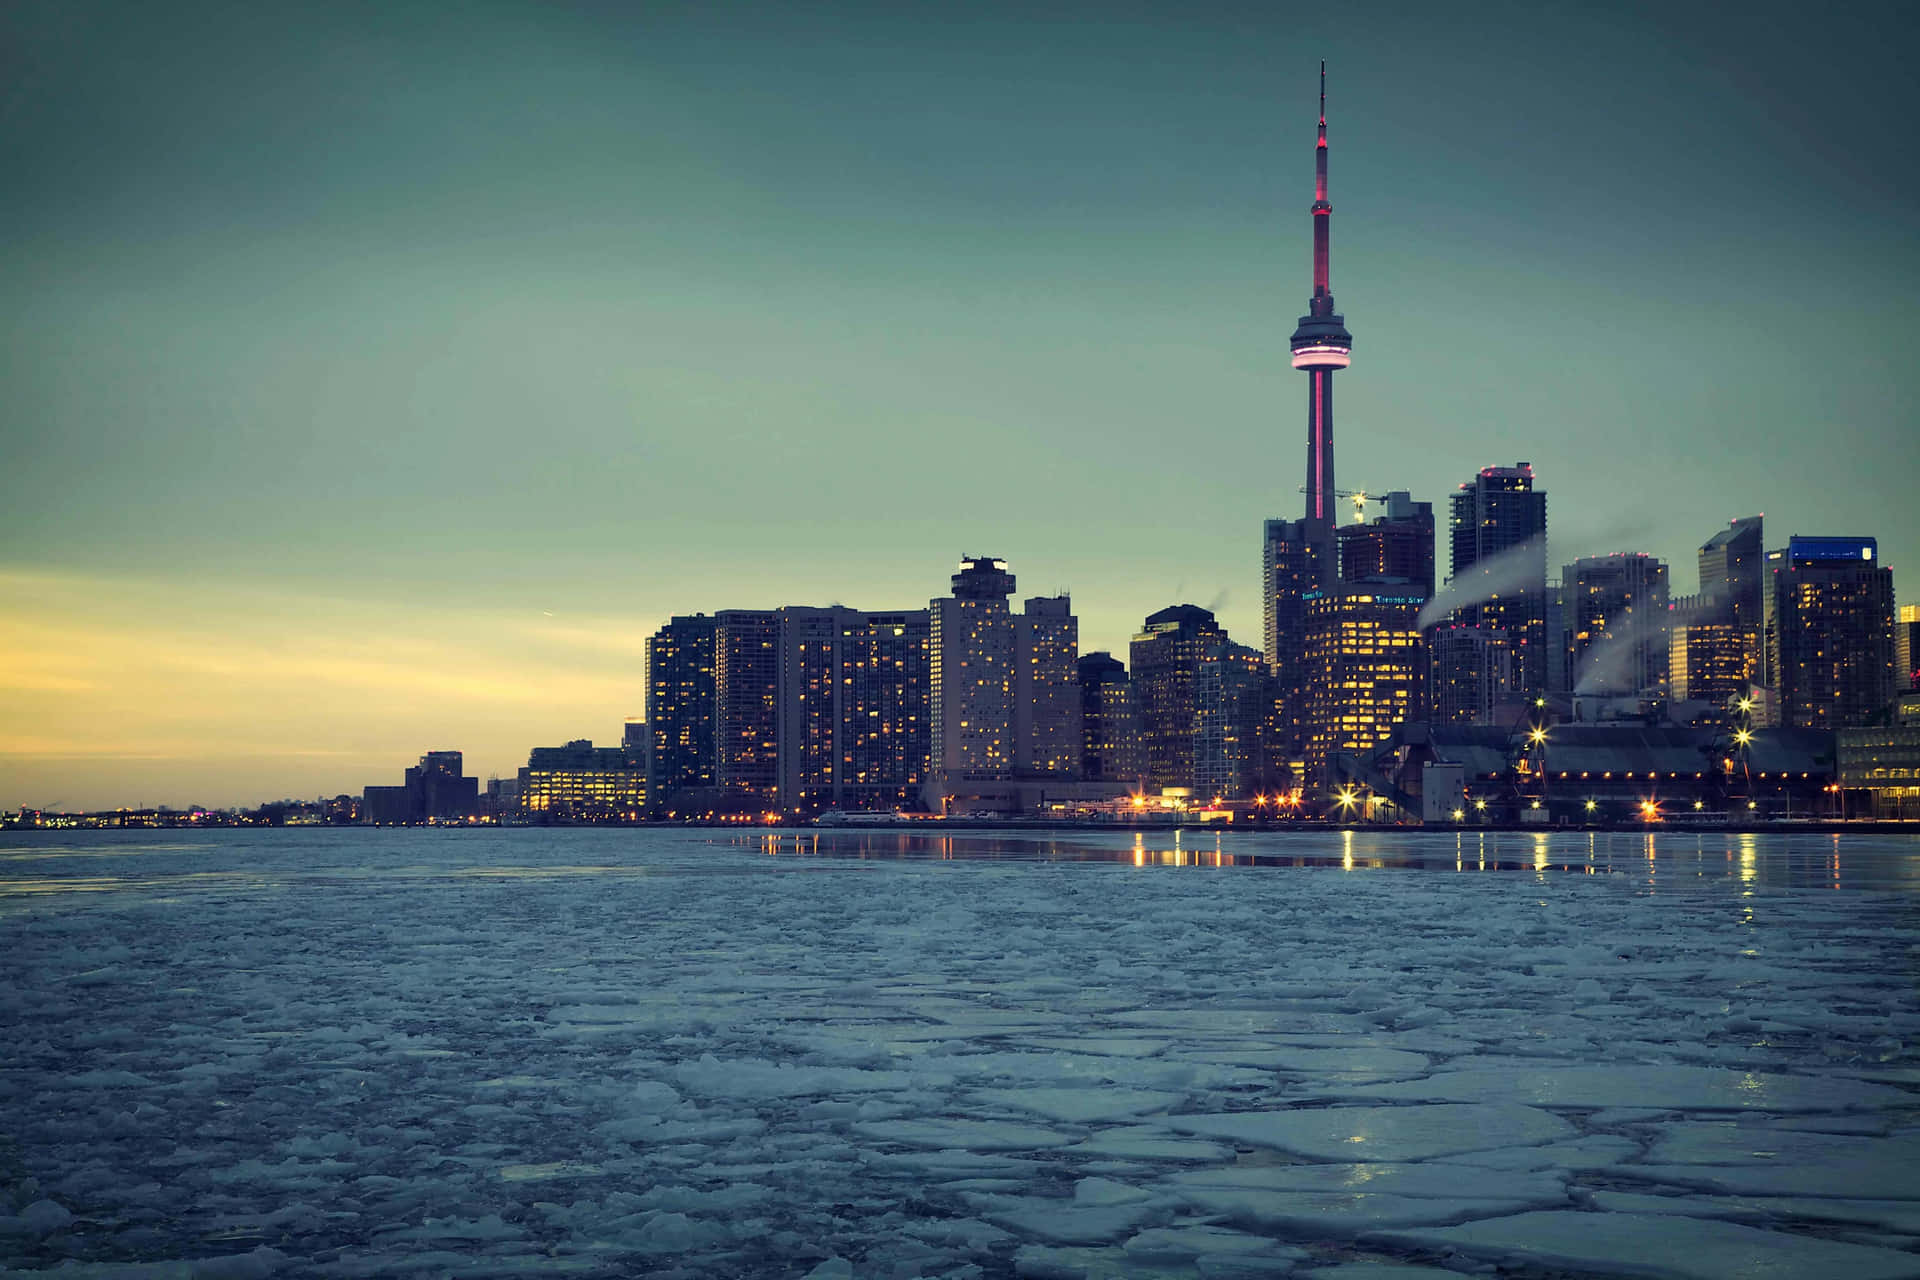 “The bustling skyline of Toronto, Canada”